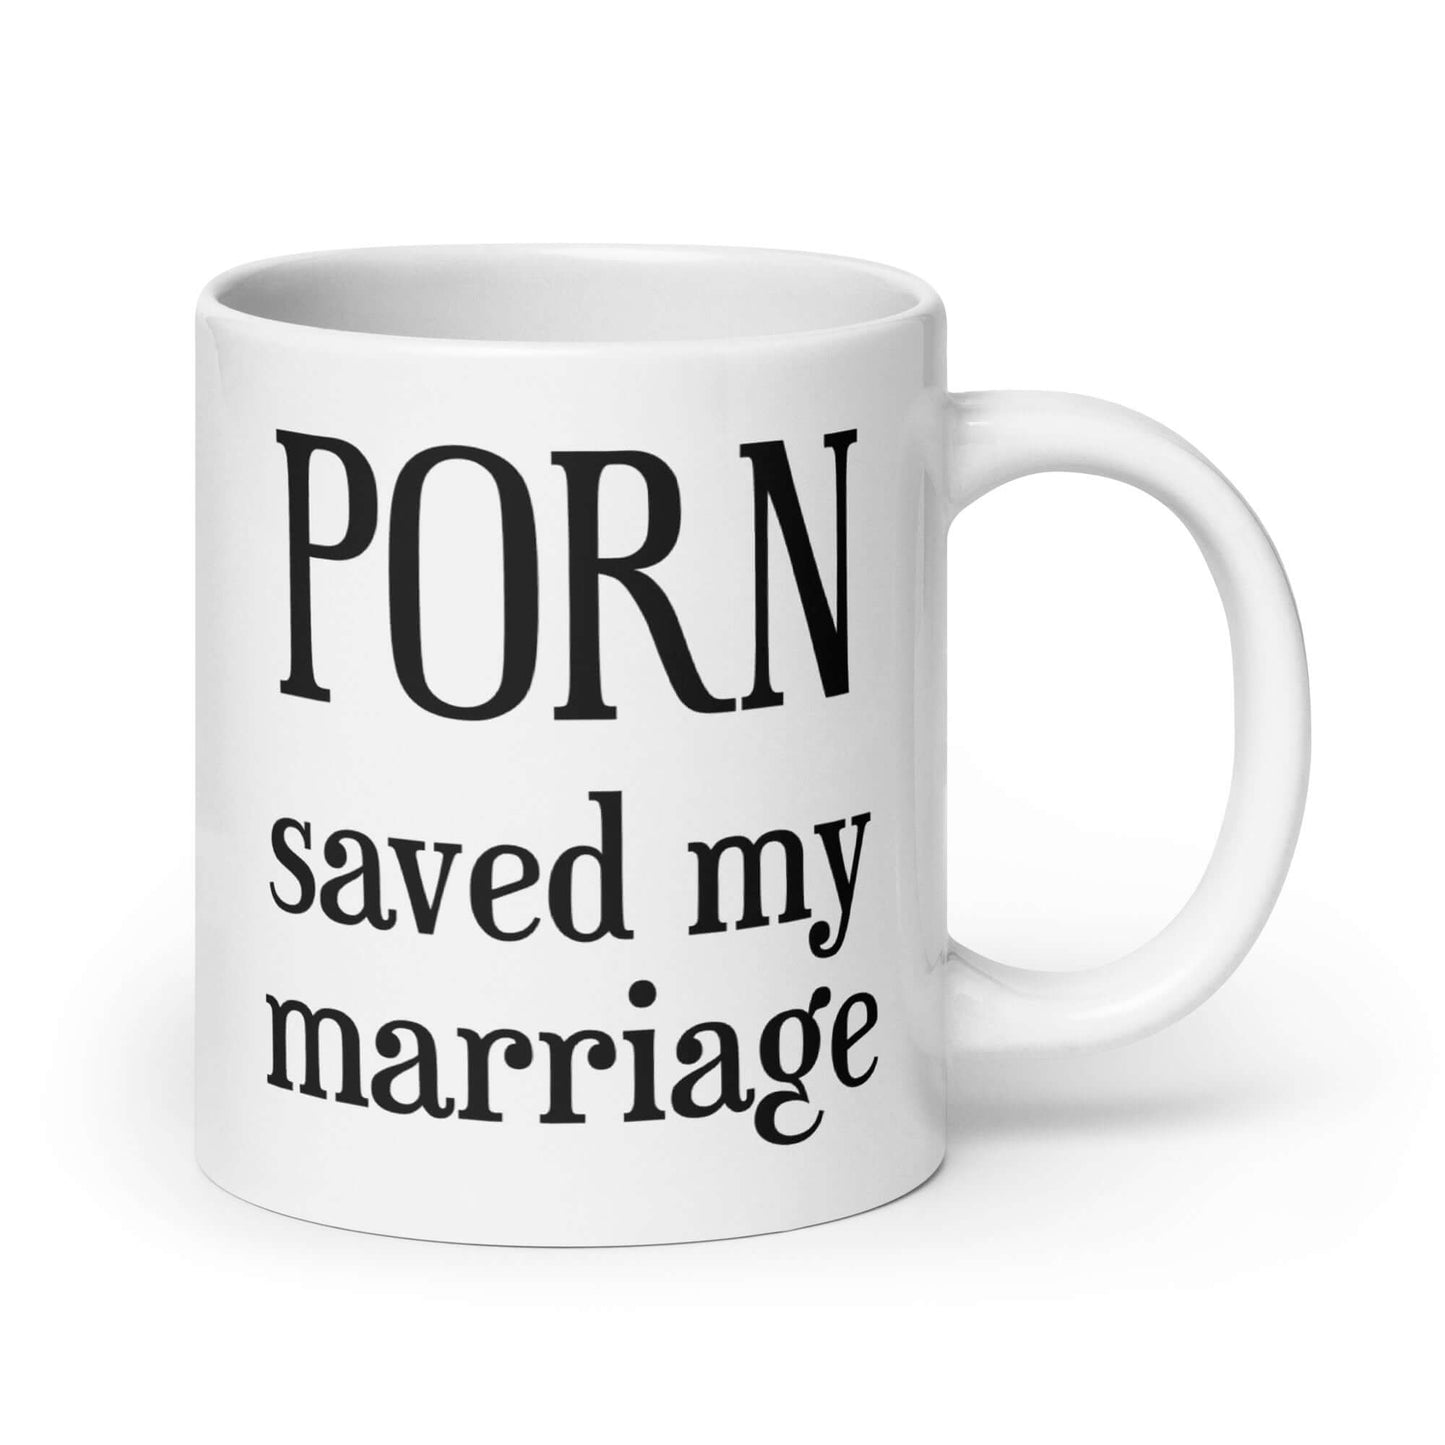 Porn saved my marriage mug